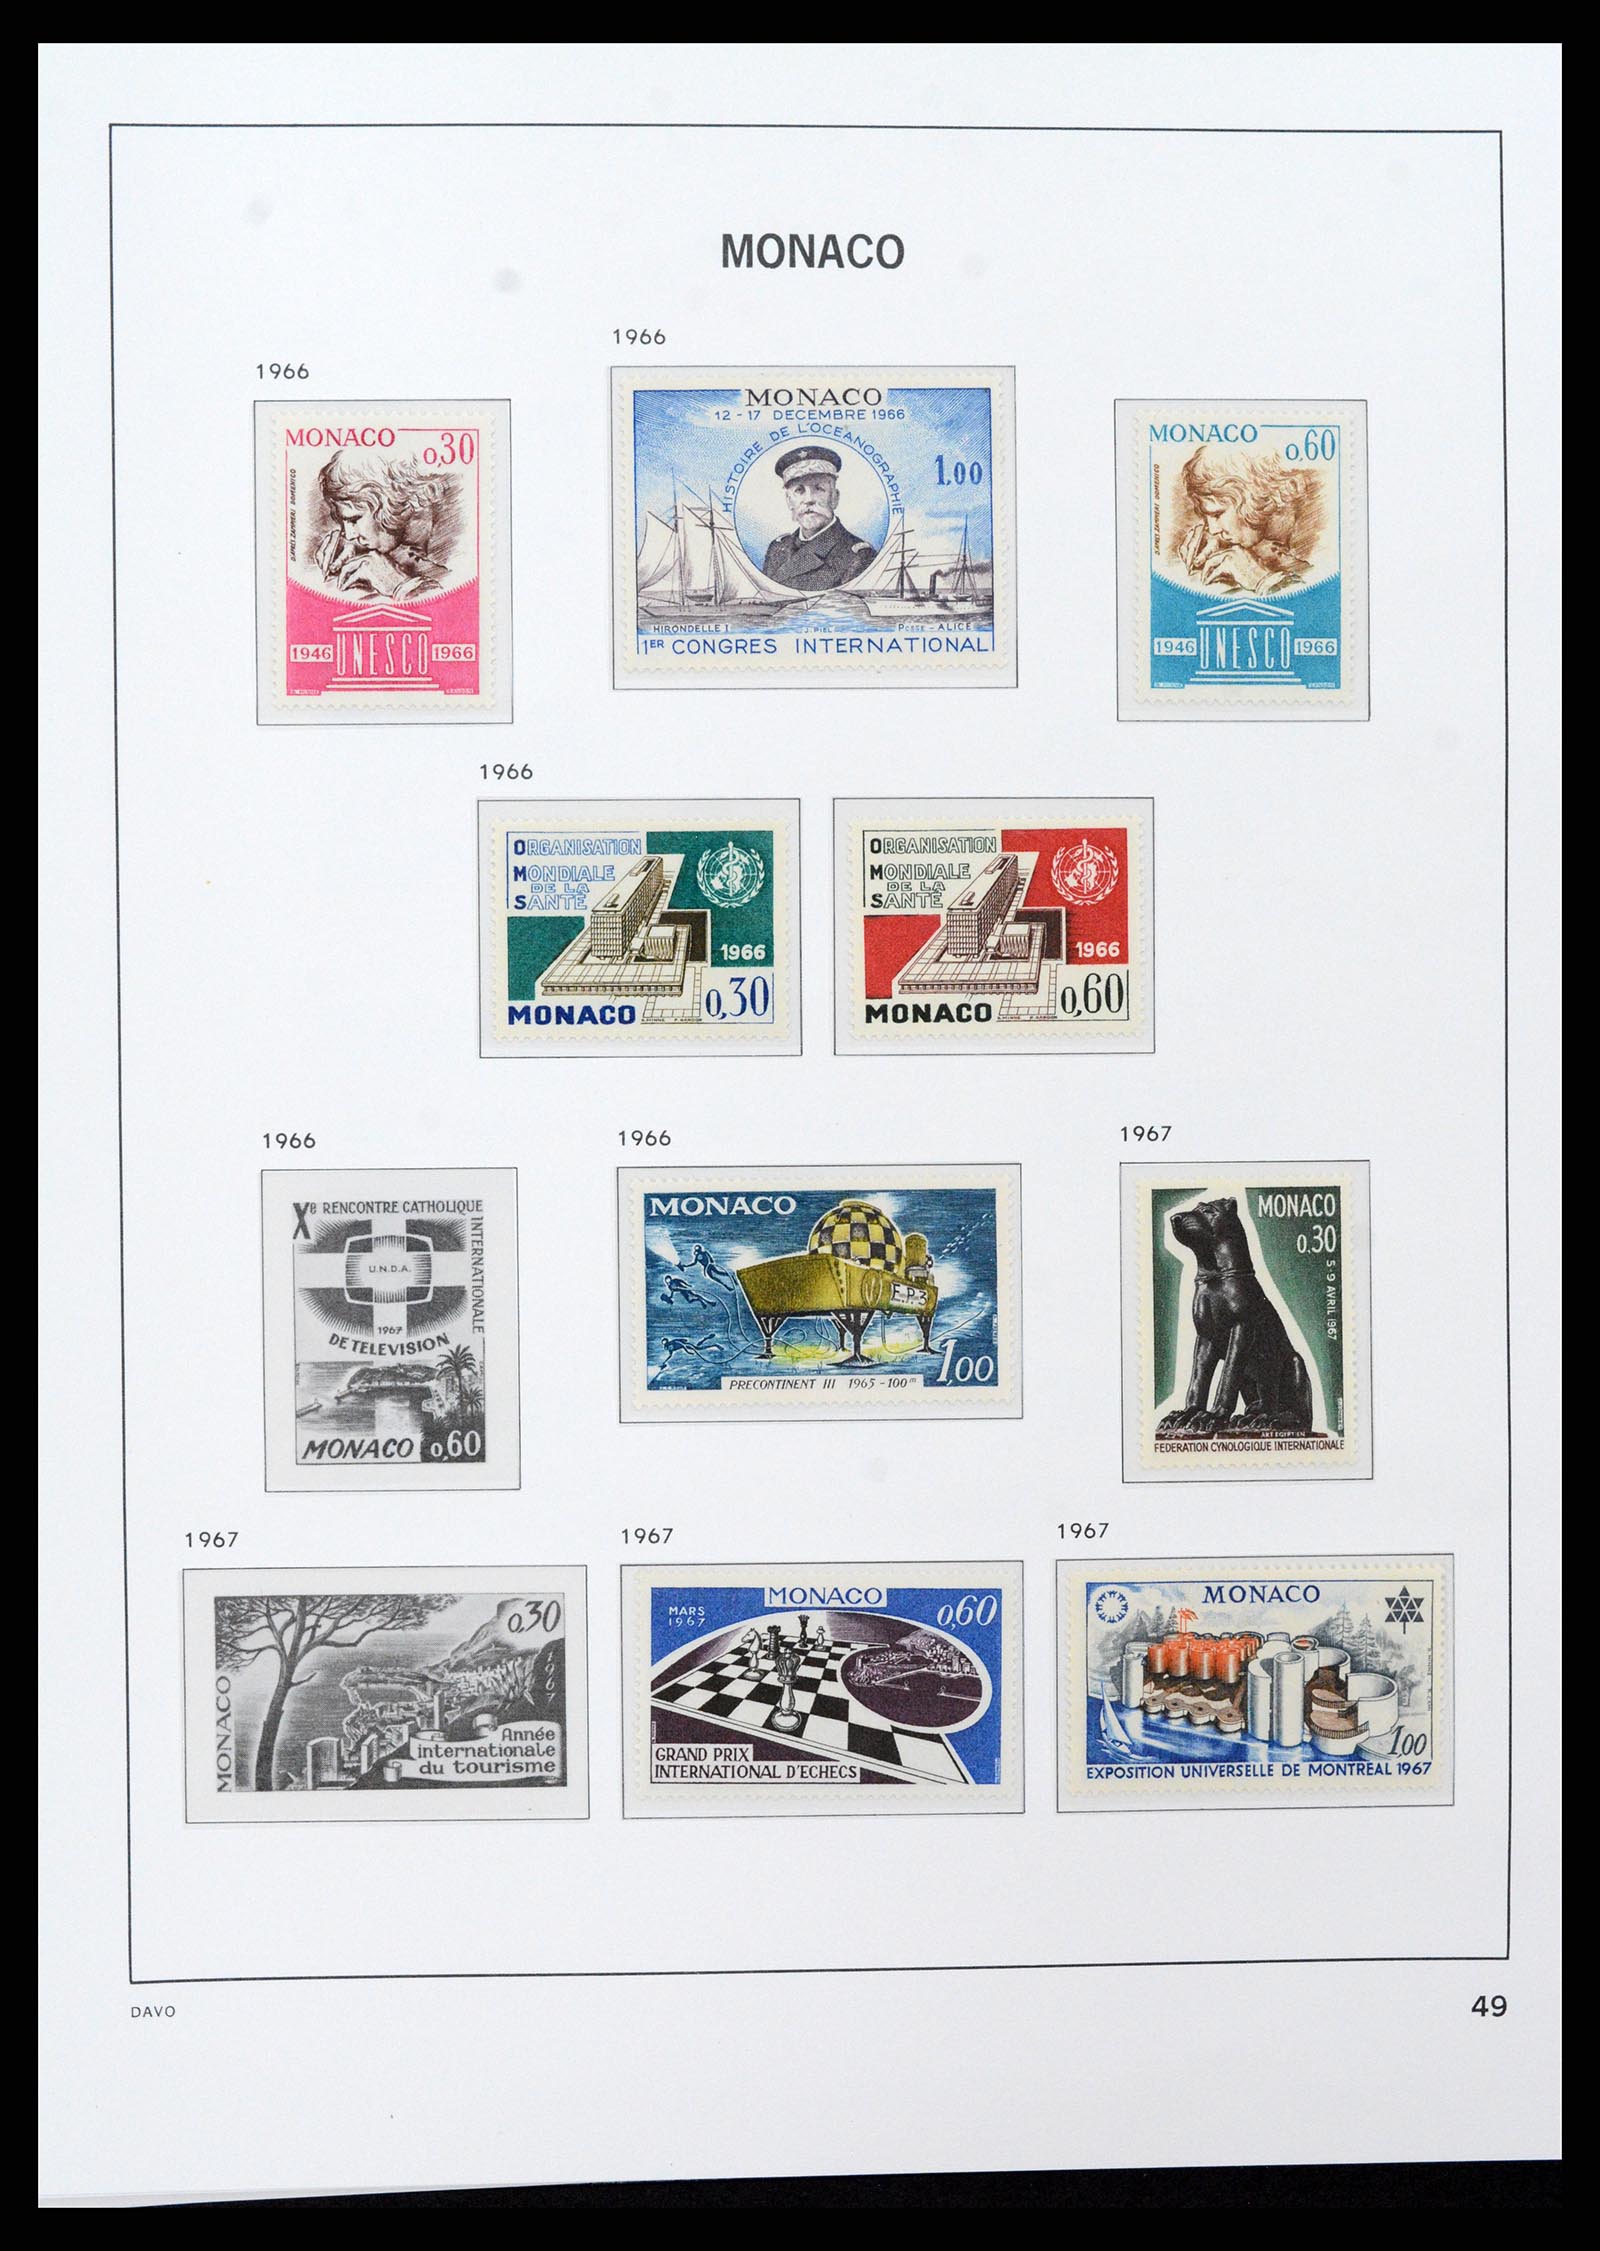 37279 049 - Stamp collection 37279 Monaco 1885-1969.